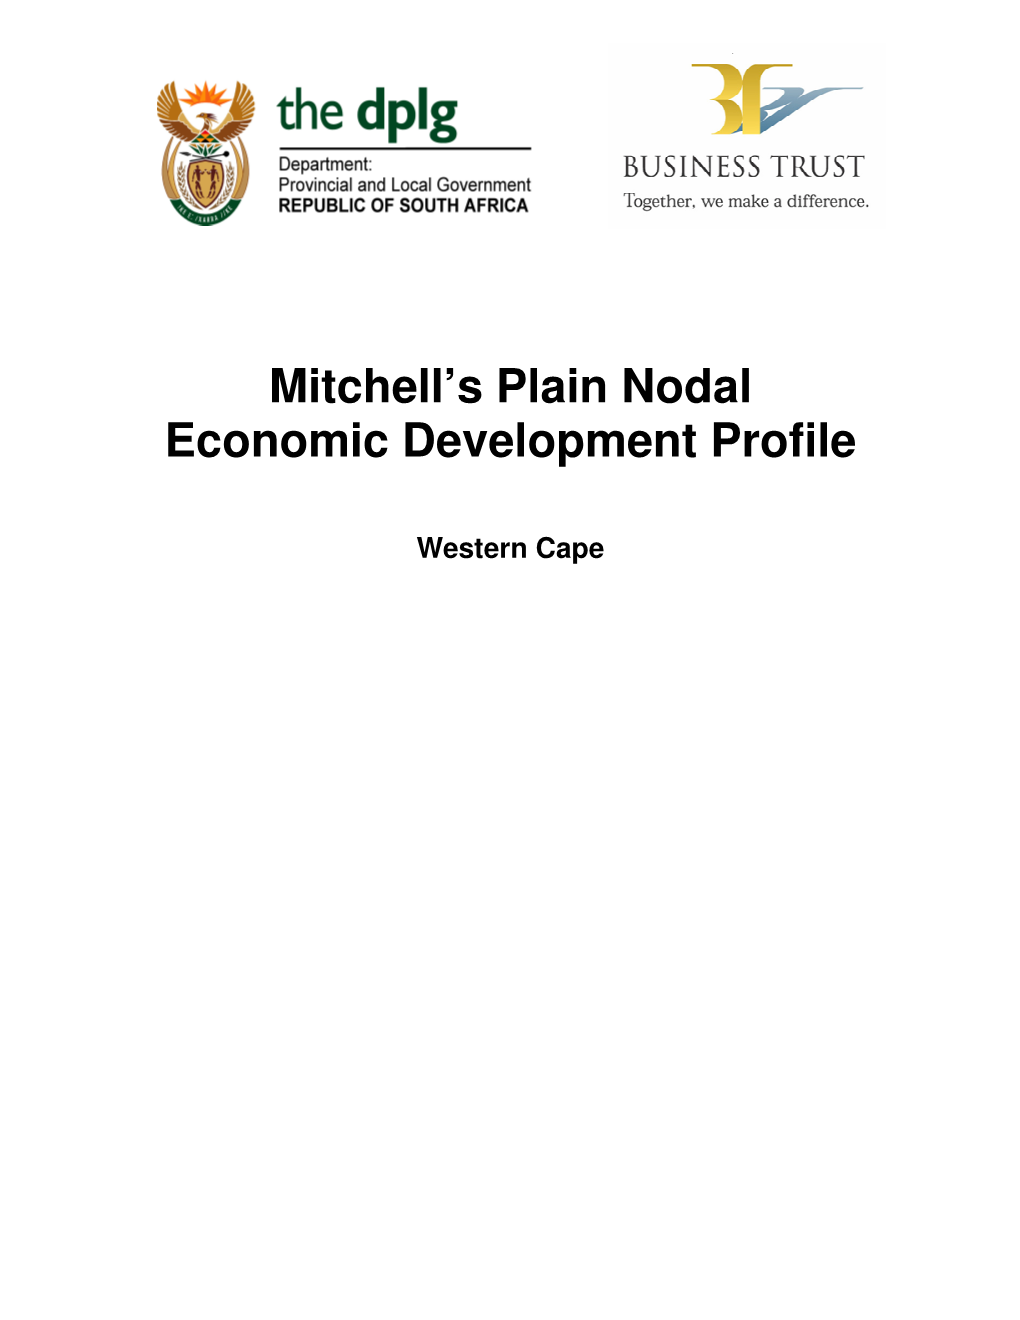 Mitchell's Plain Nodal Economic Development Profile